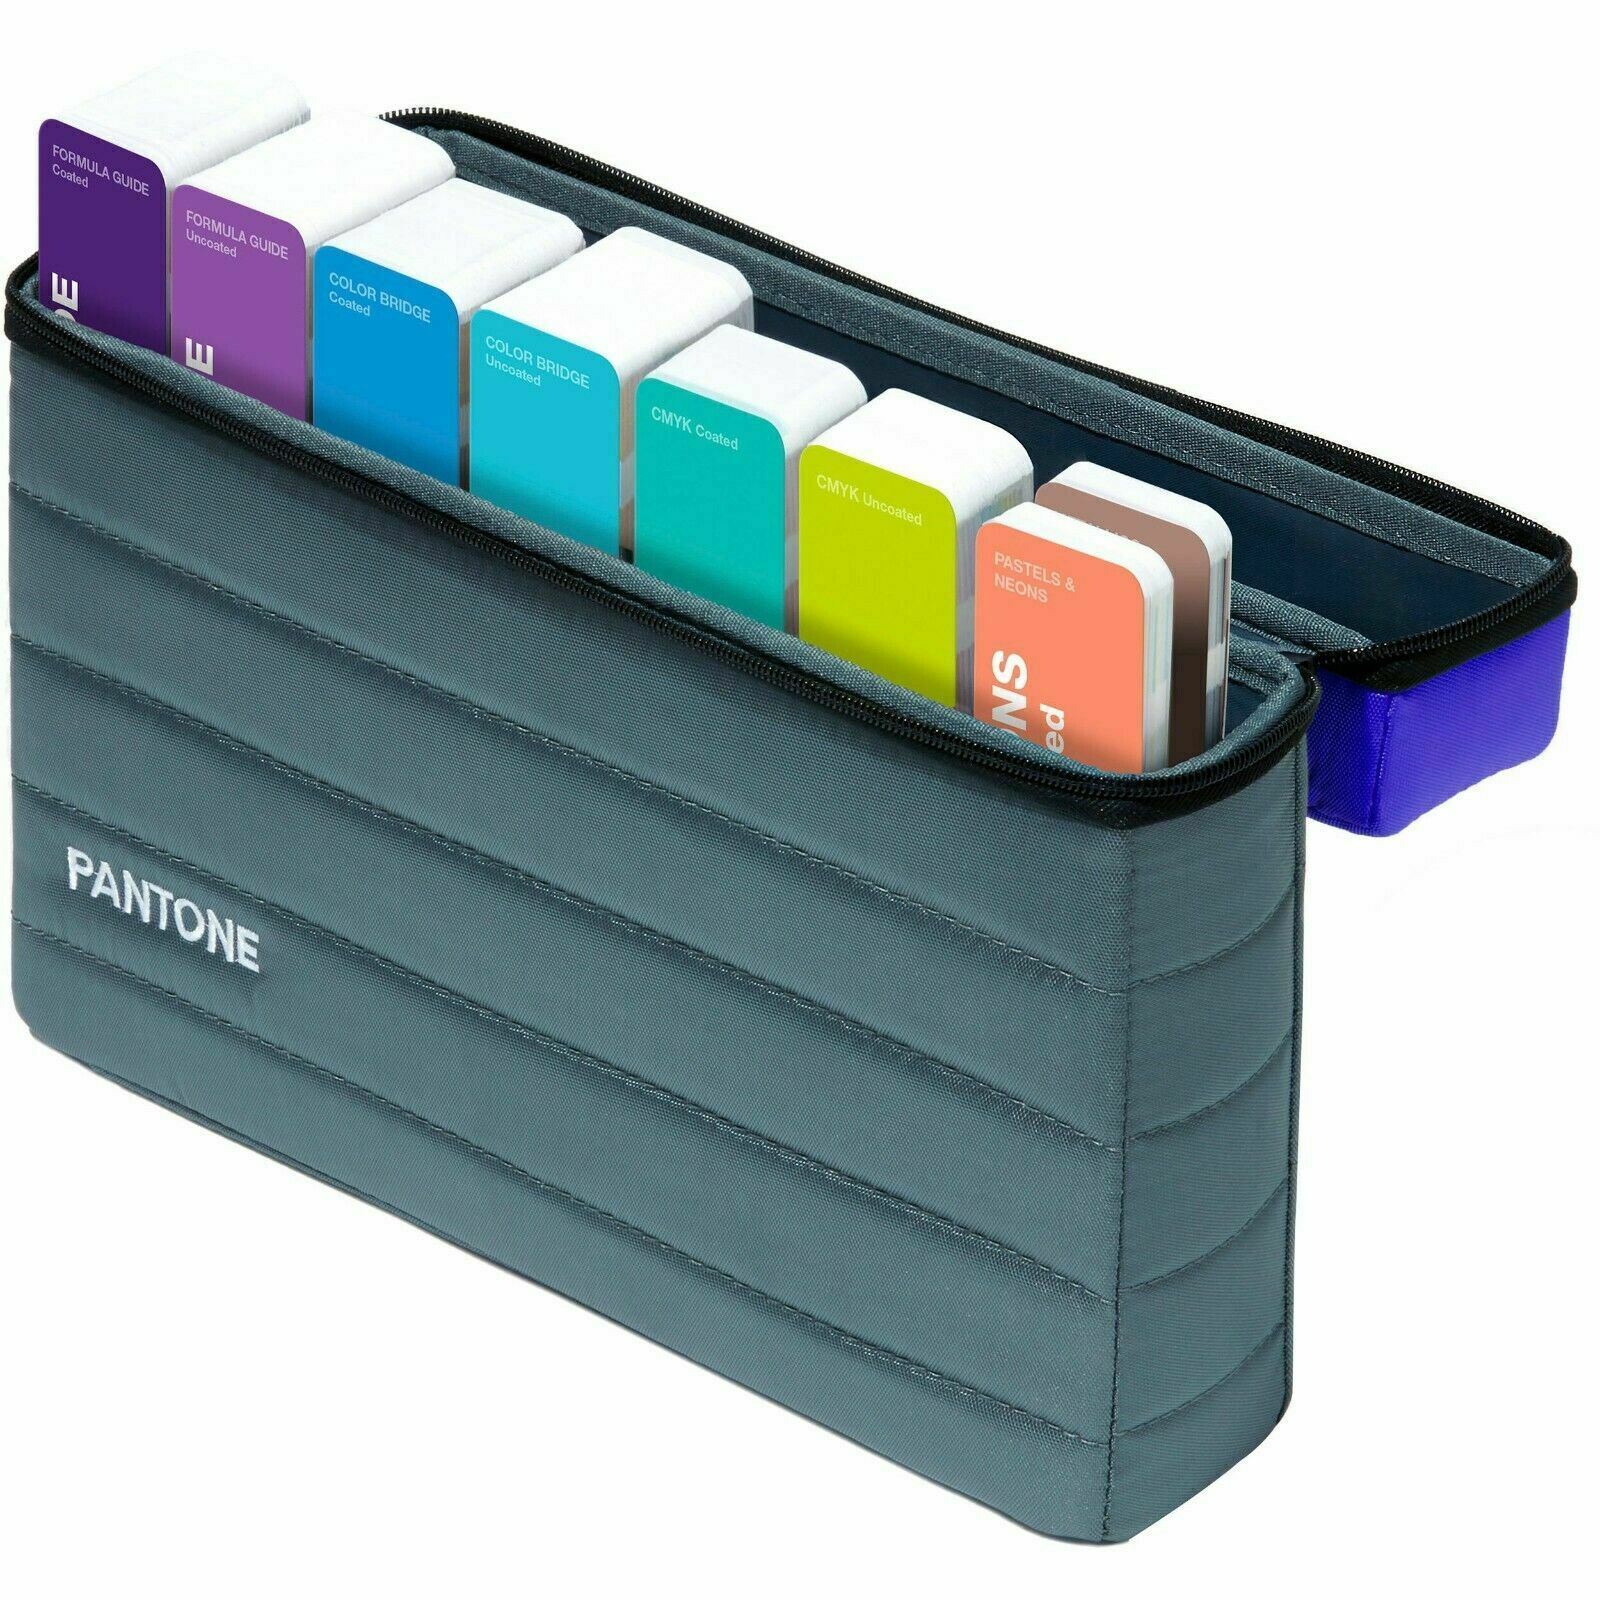 Pantone Portable Studio Guide GPG304A Set of 9 Color Formula Guides 2020